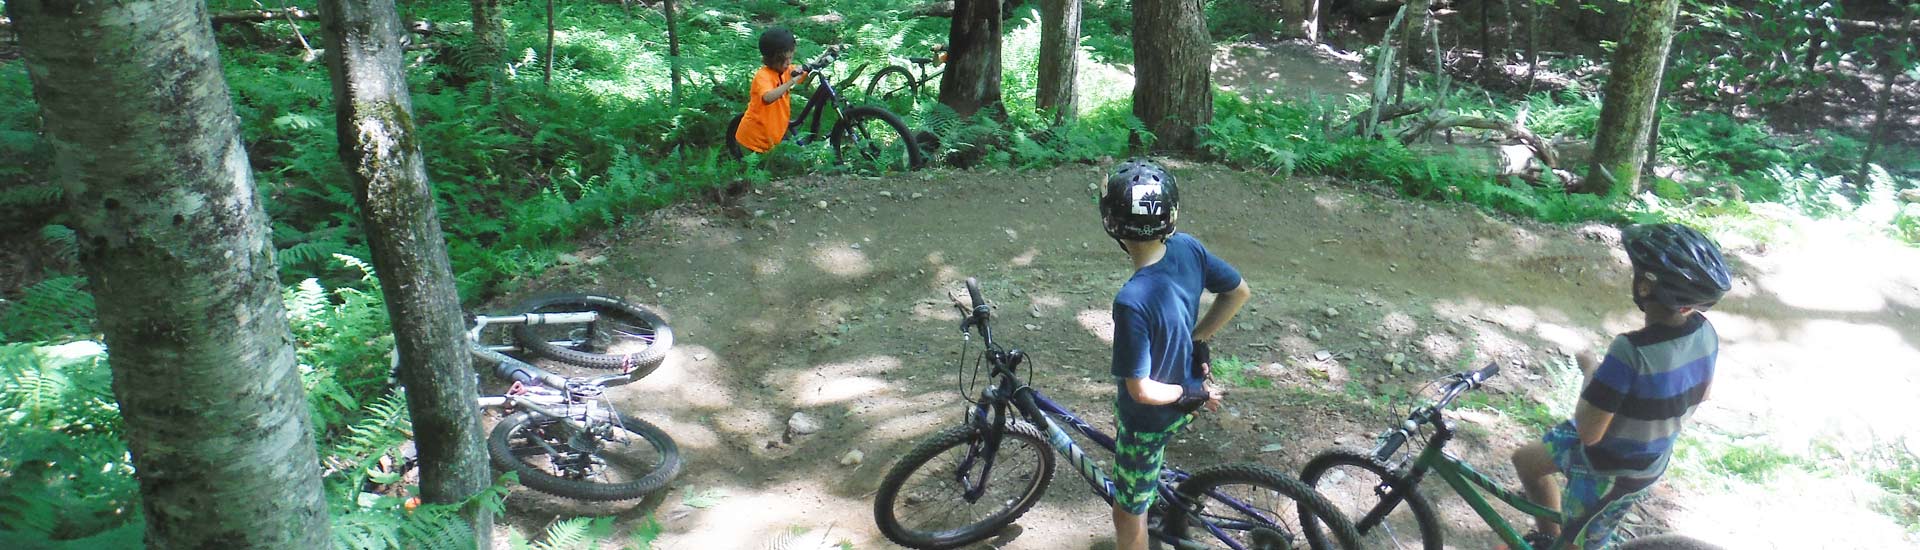 Stowe Kids' Mountain Bike Camp